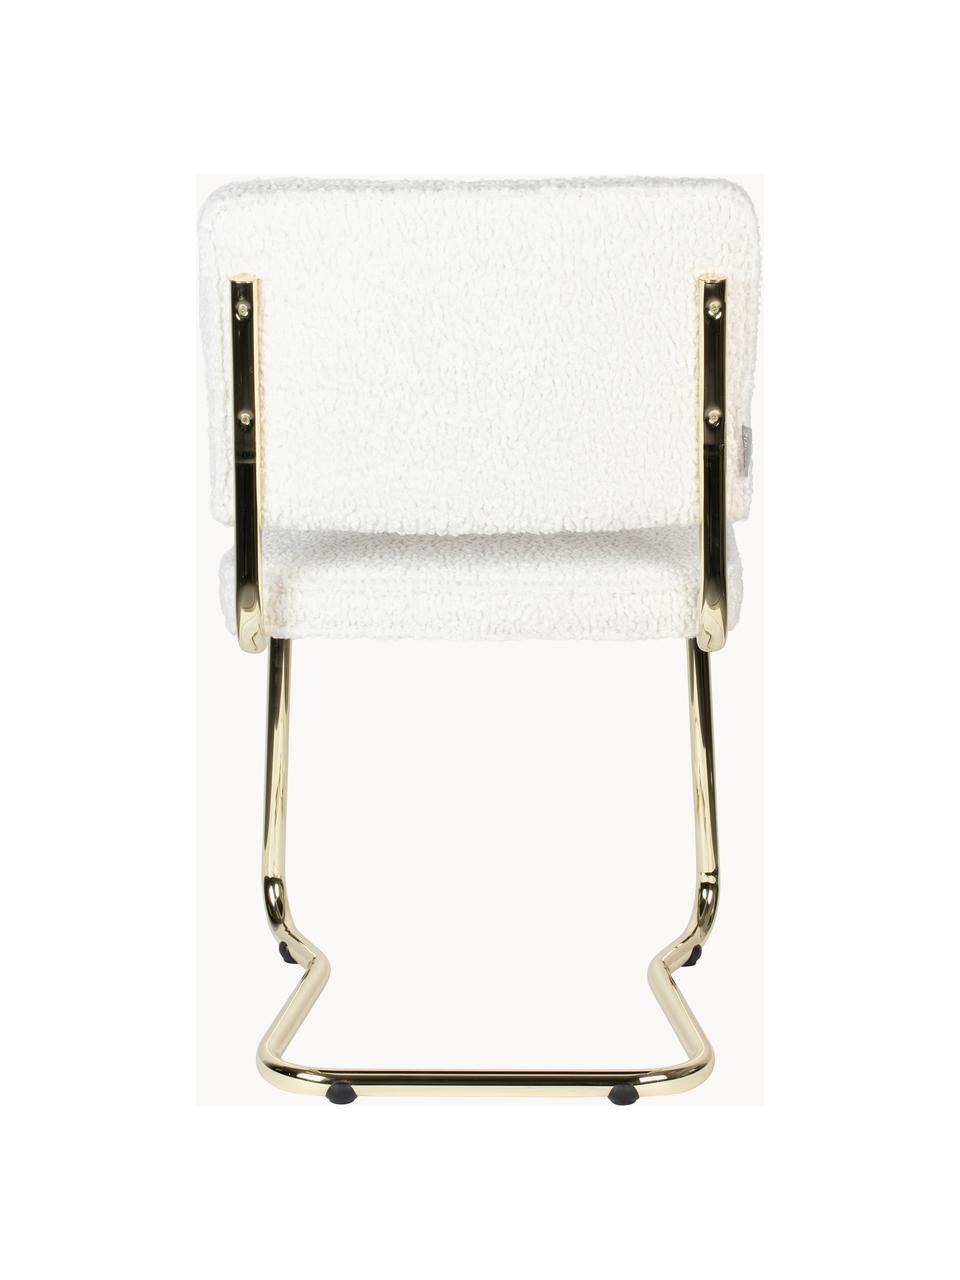 Chaise cantilever tissu peluche Kink, Peluche blanc, cadre laiton, larg. 48 x prof. 48 cm